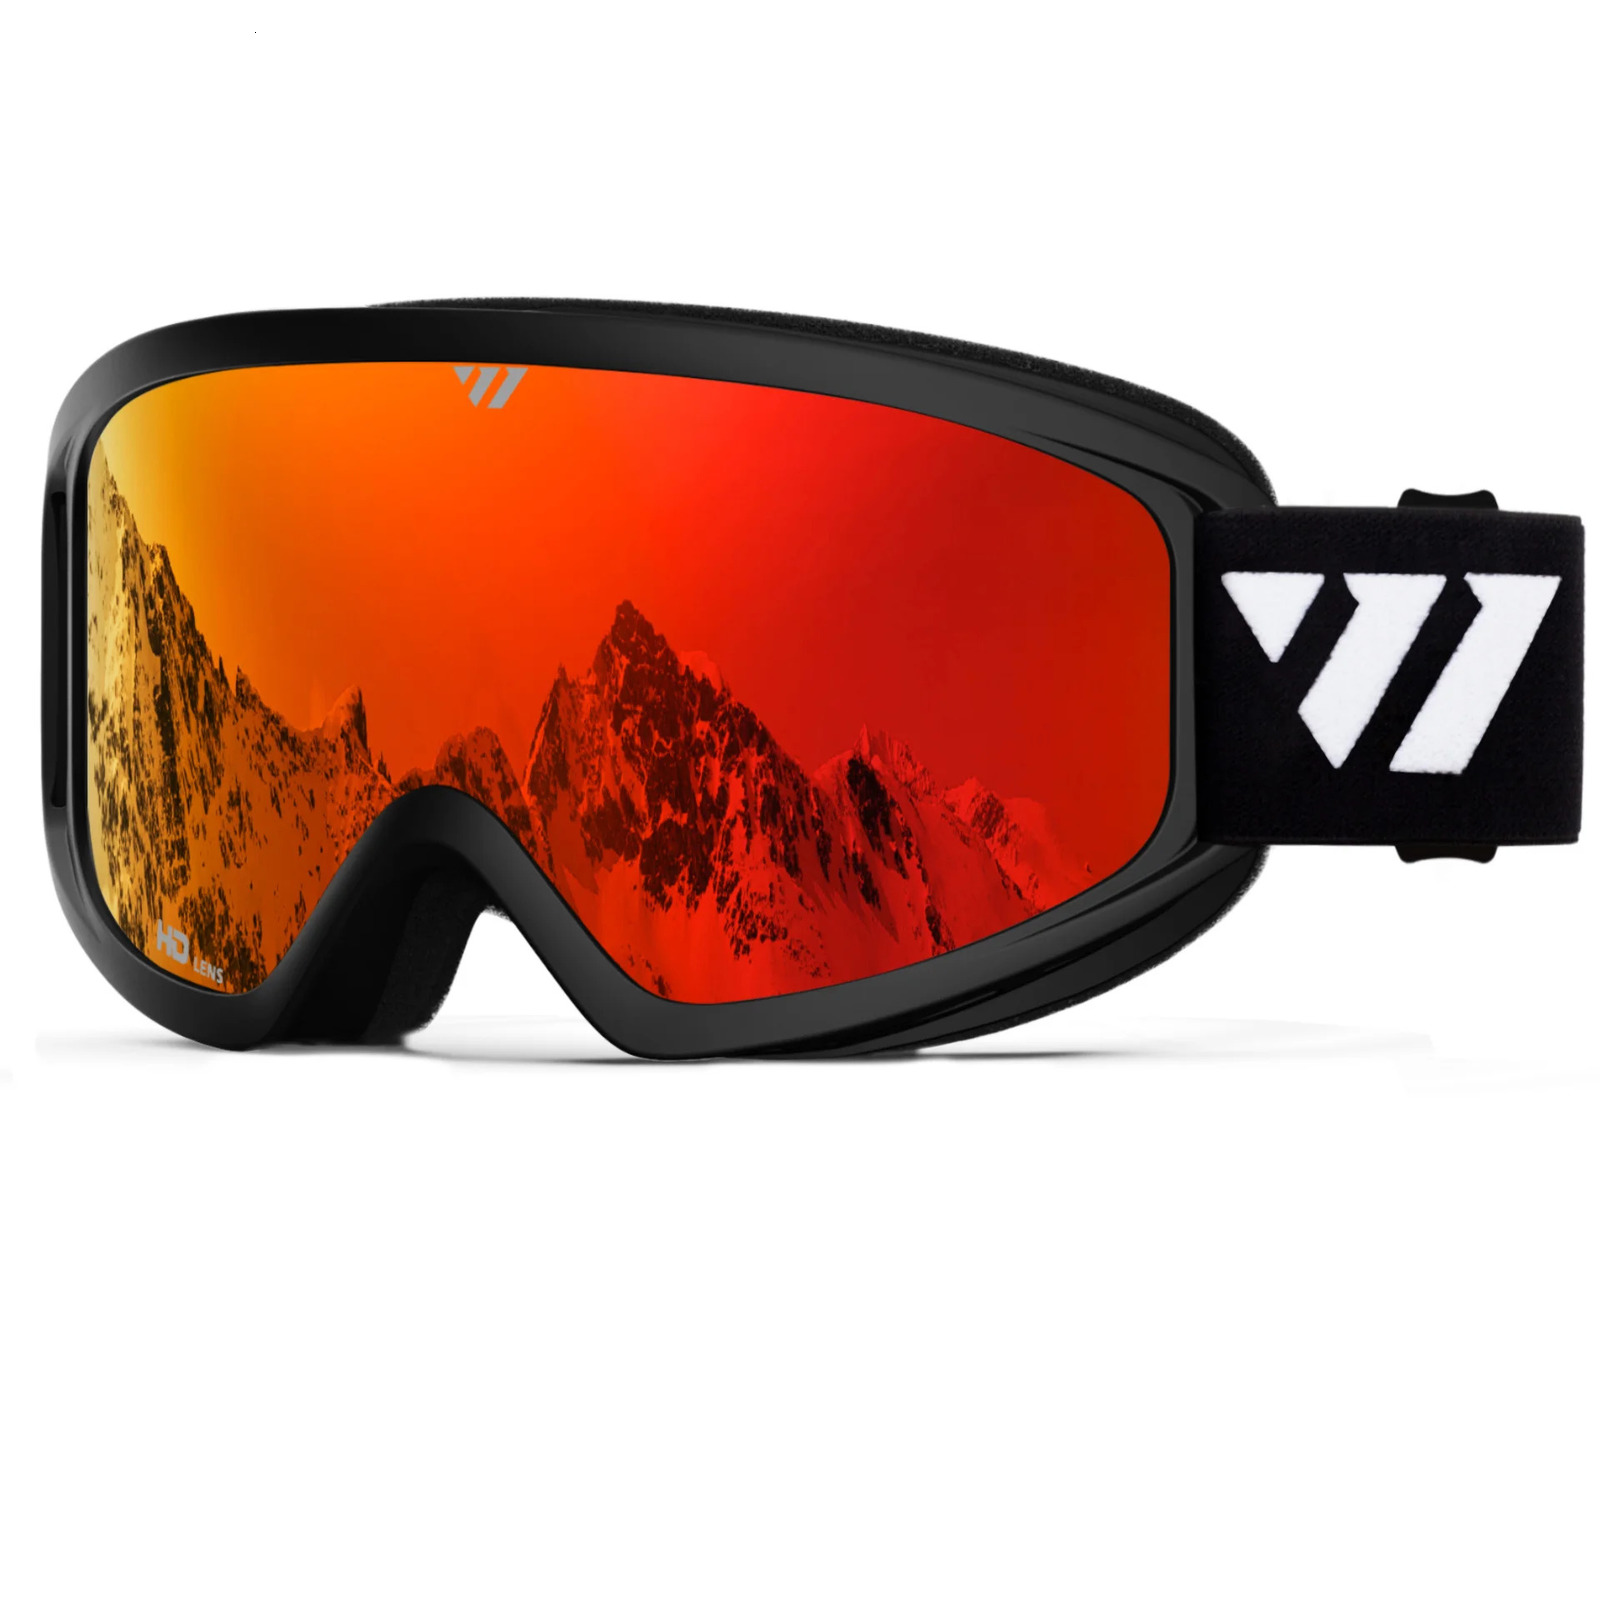 Juli Brand Professional Ski Goggles двойные слои линзы против Fog UV400 лыжные очки лыжные очки для сноуборда Gogglesw Goggles Мужчины женщины W1 231221